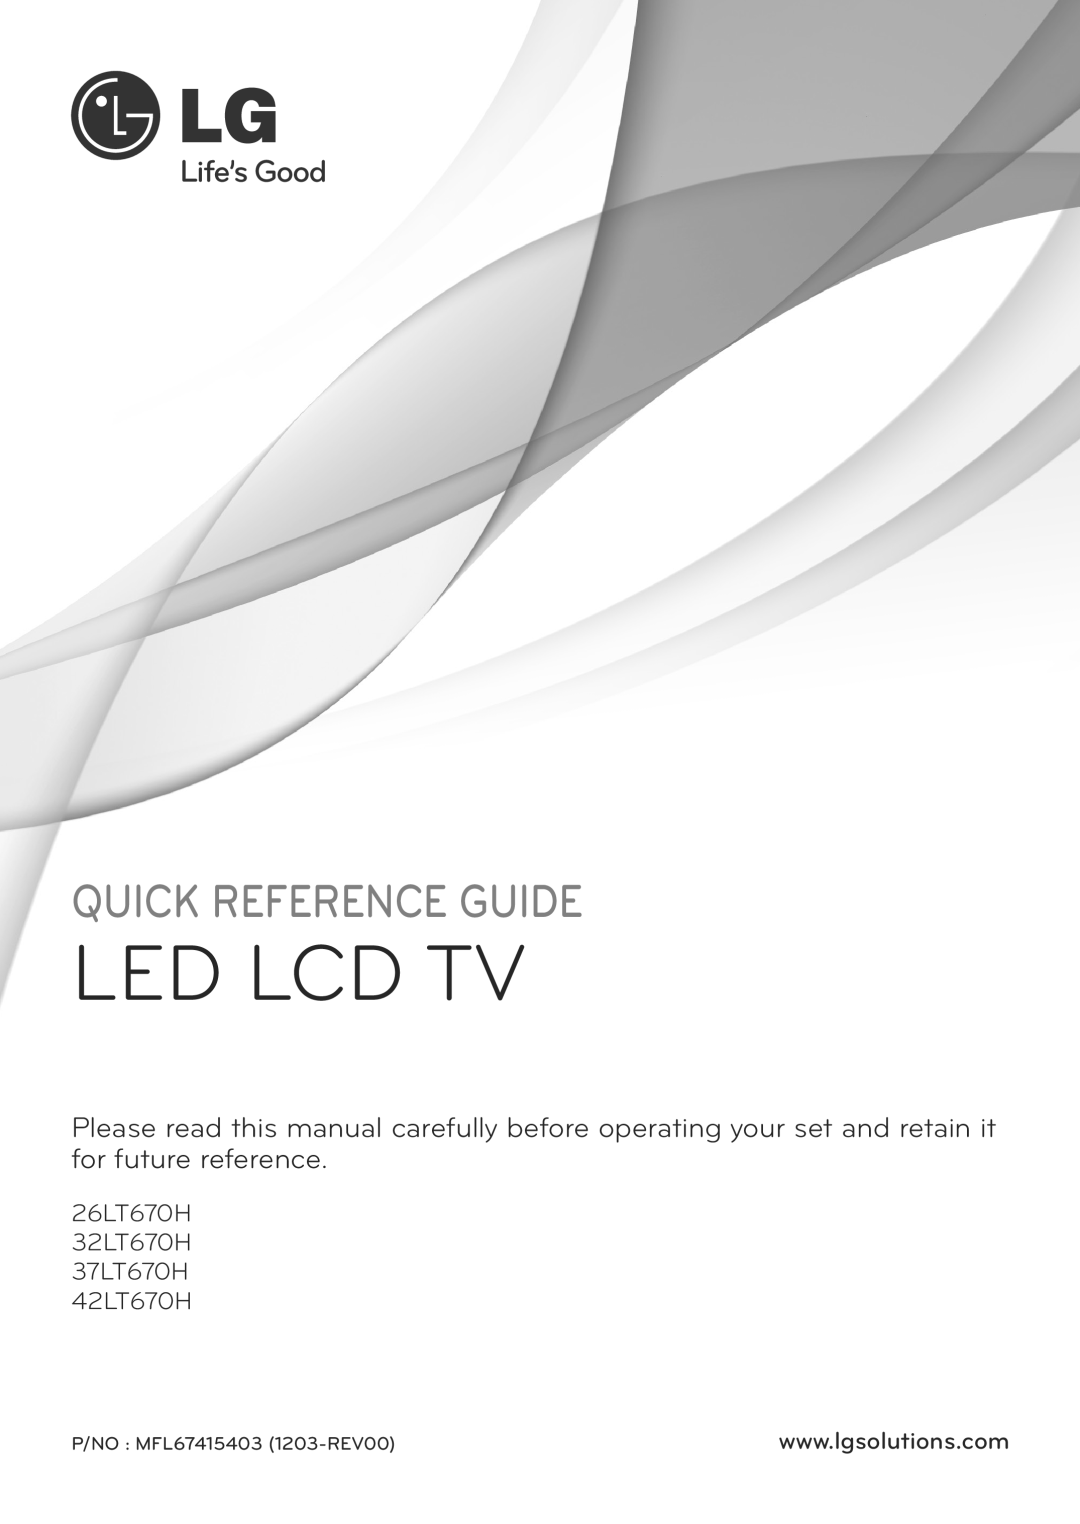 LG Electronics manual Led Lcd Tv, Quick Reference Guide, 26LT670H 32LT670H 37LT670H 42LT670H 